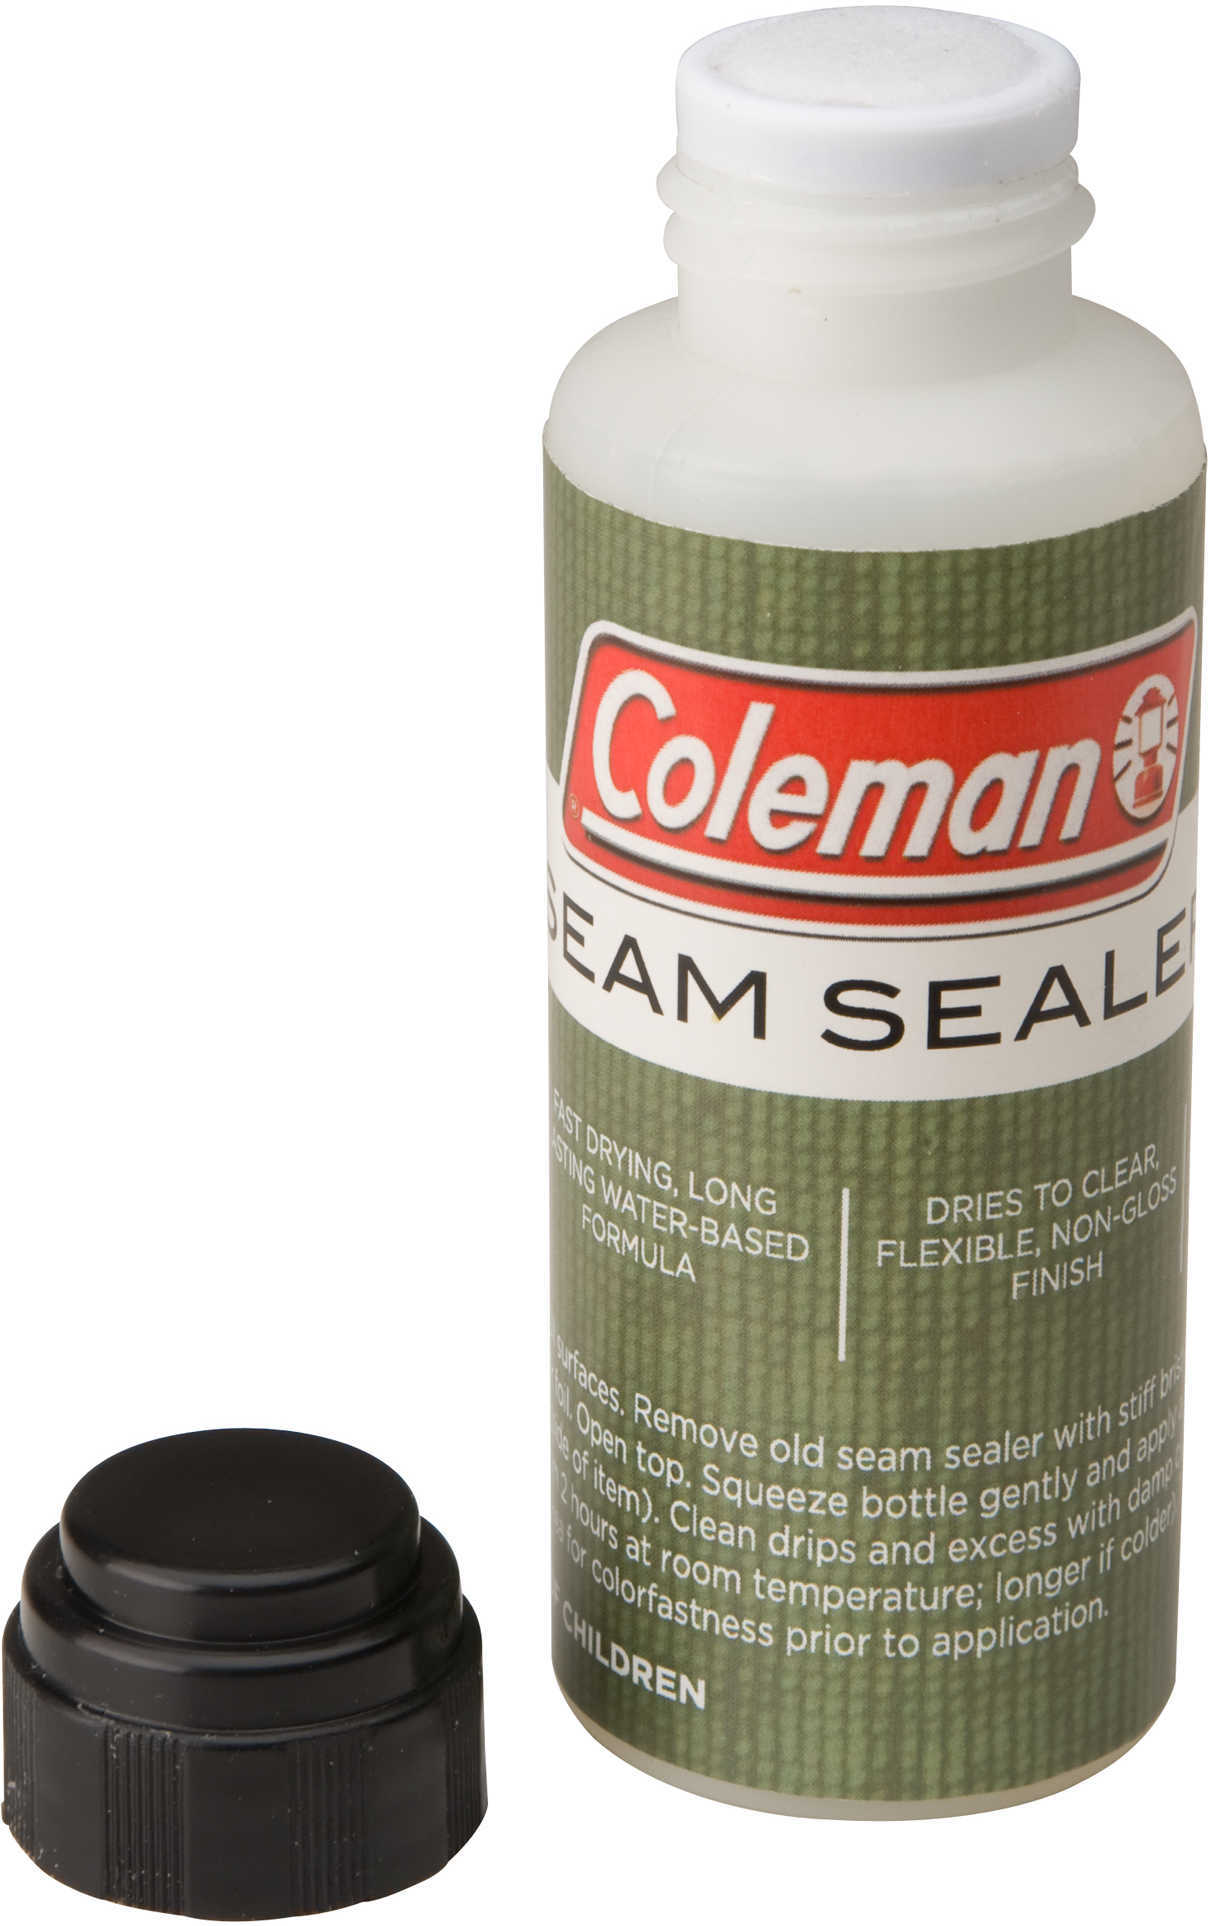 Coleman Seam Sealer No Brush Md: 2000016520